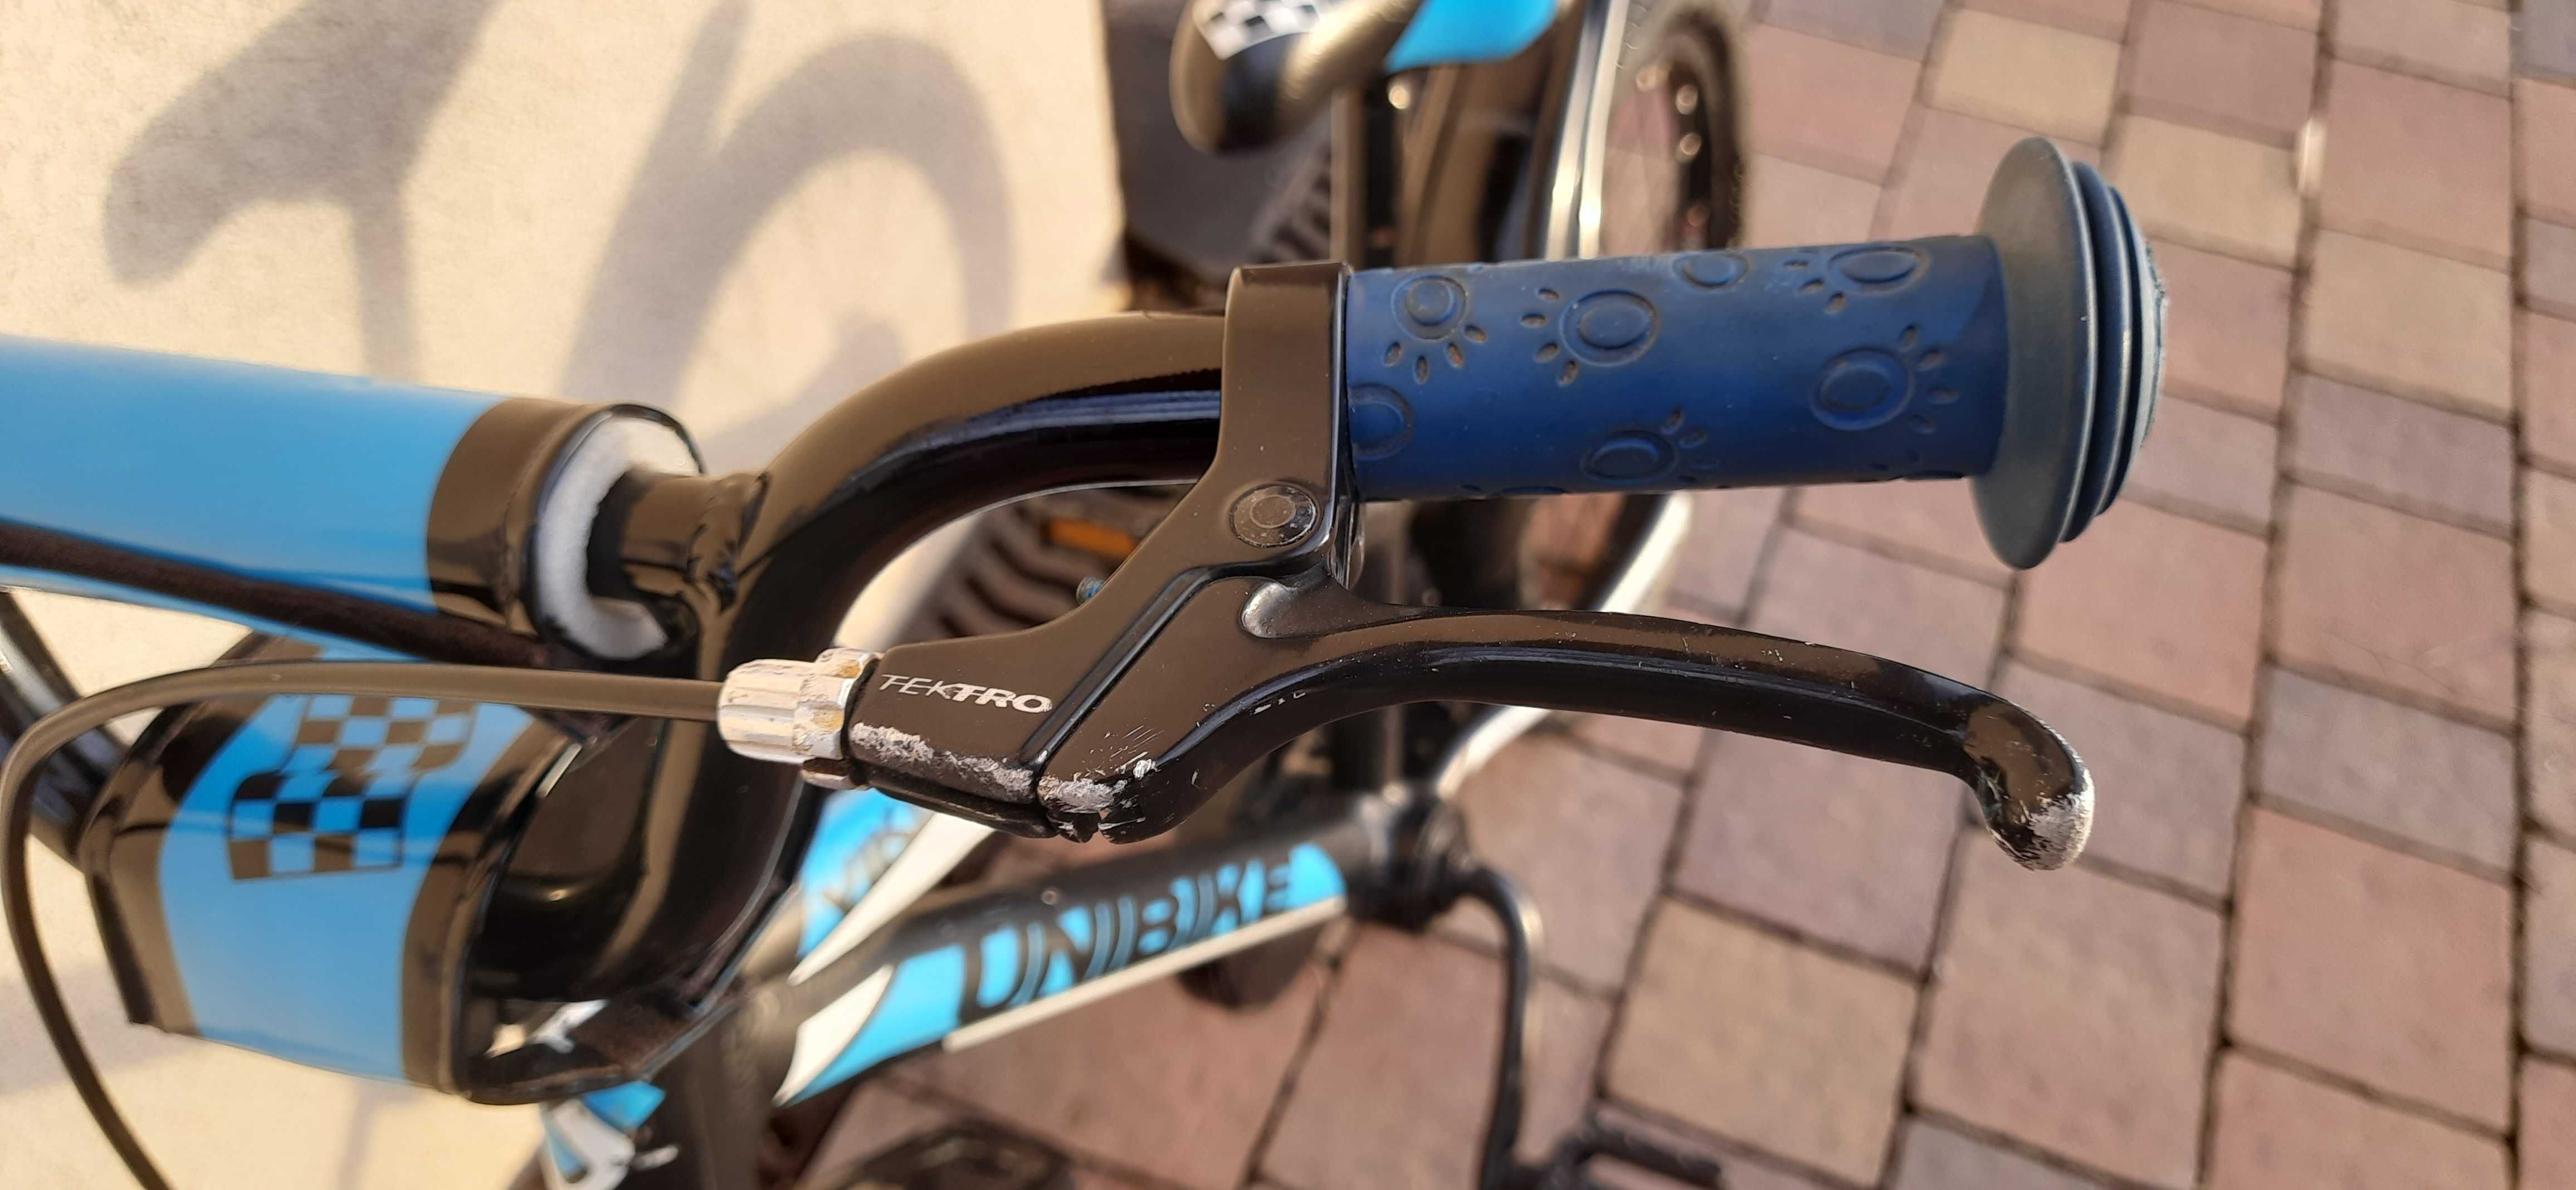 Rower Unibike Viking niebiesko-czarny